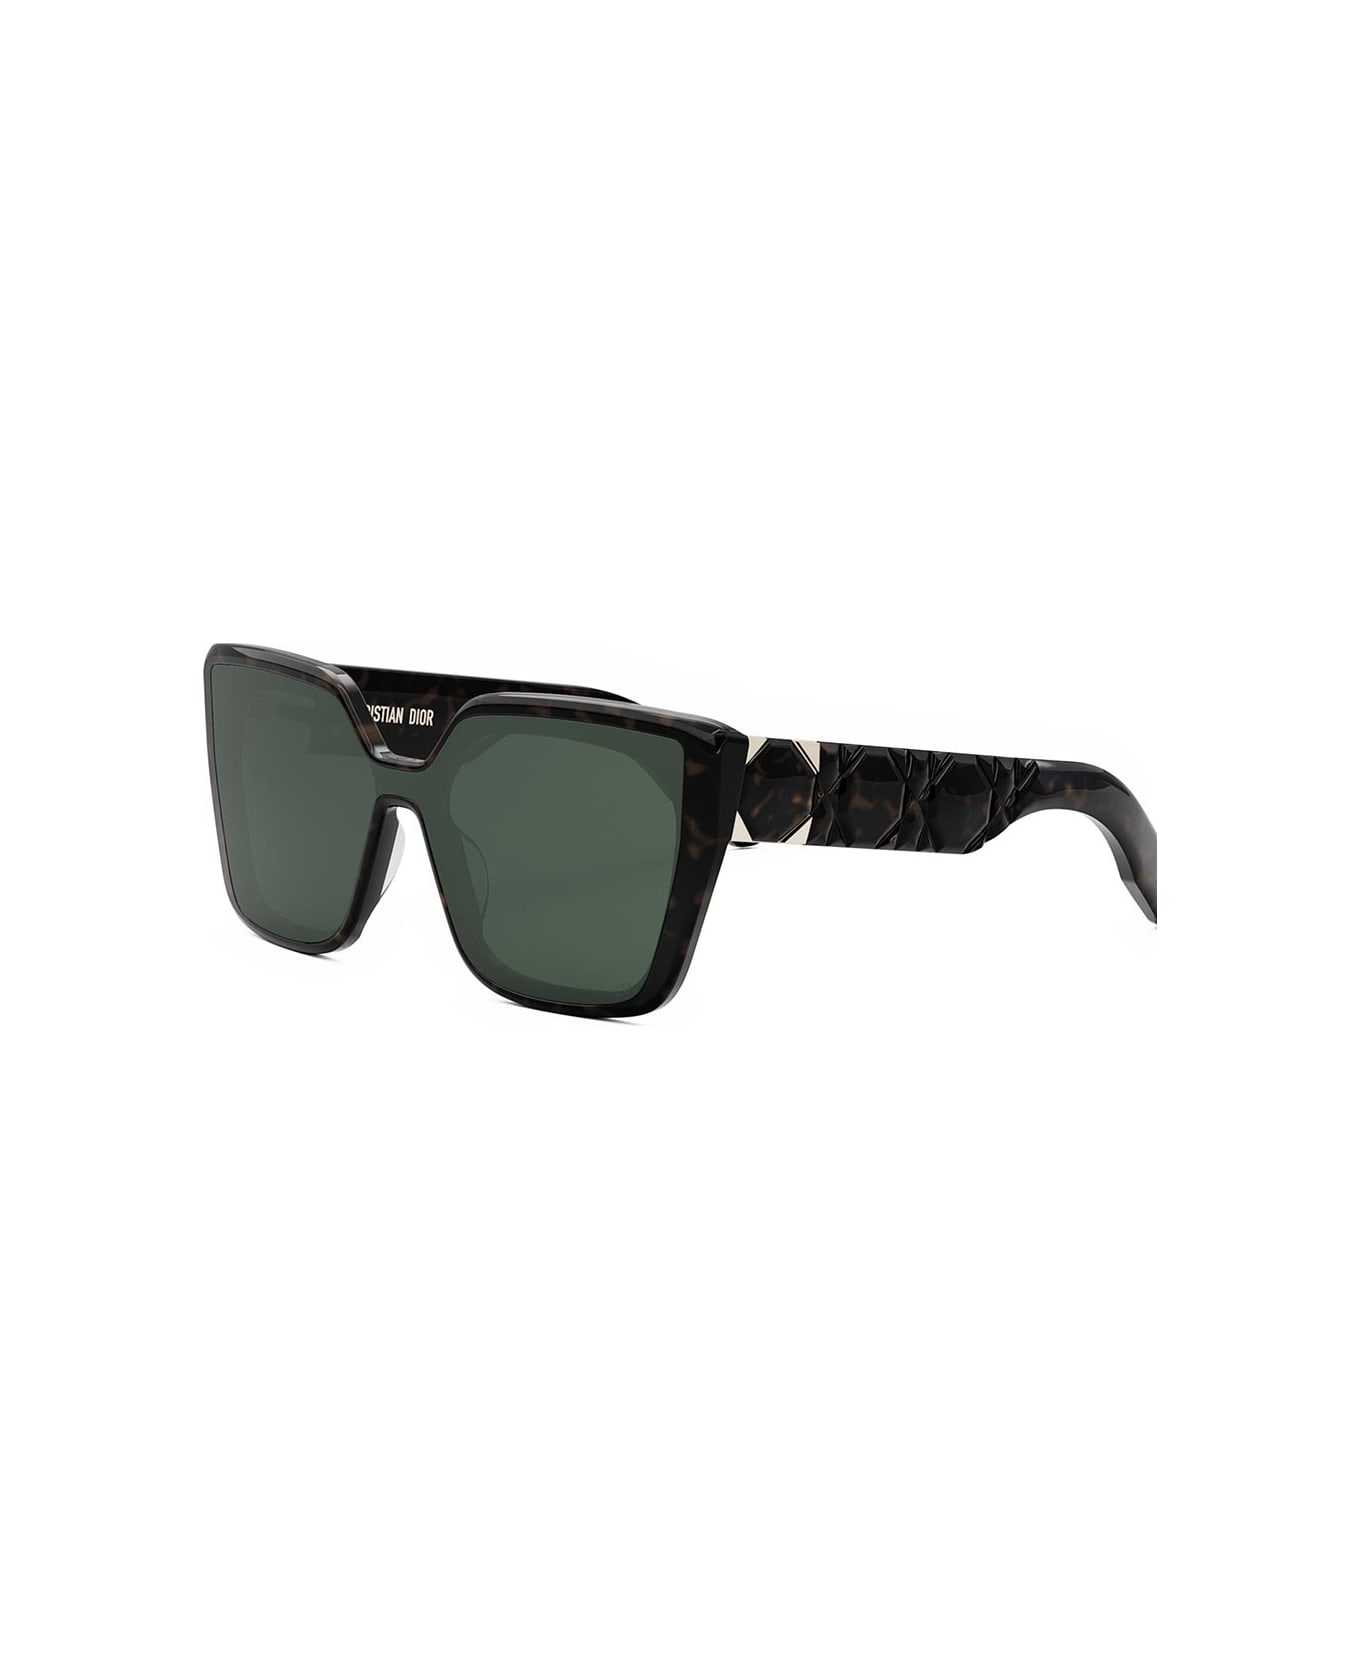 Dior Eyewear Sunglasses - Havana/Verde